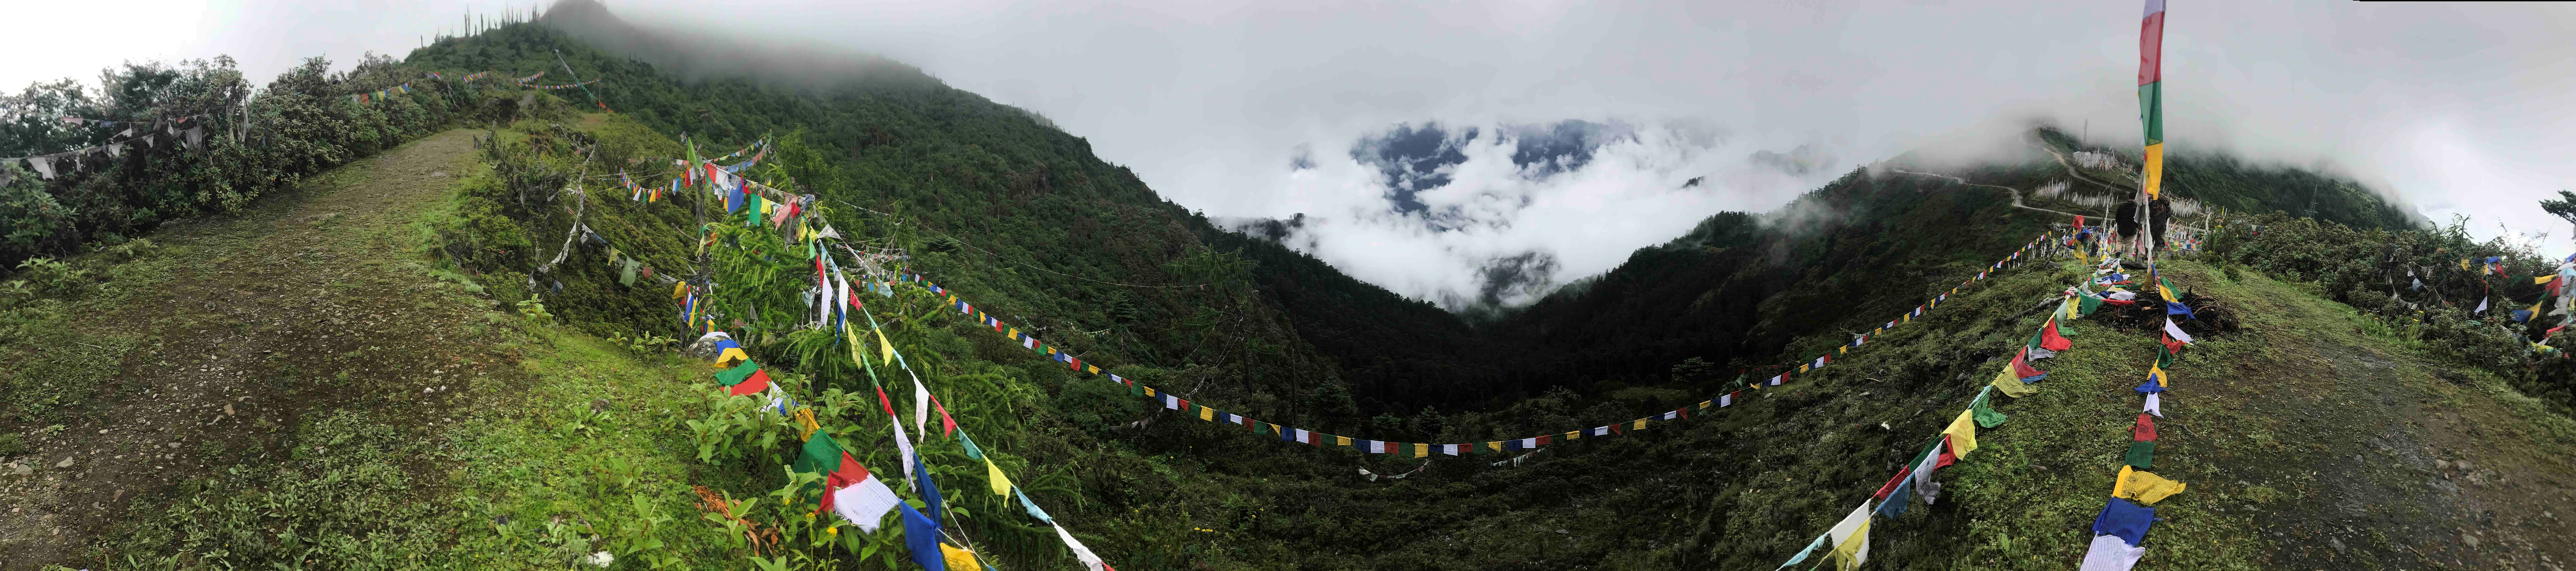 Bhuton hilltop